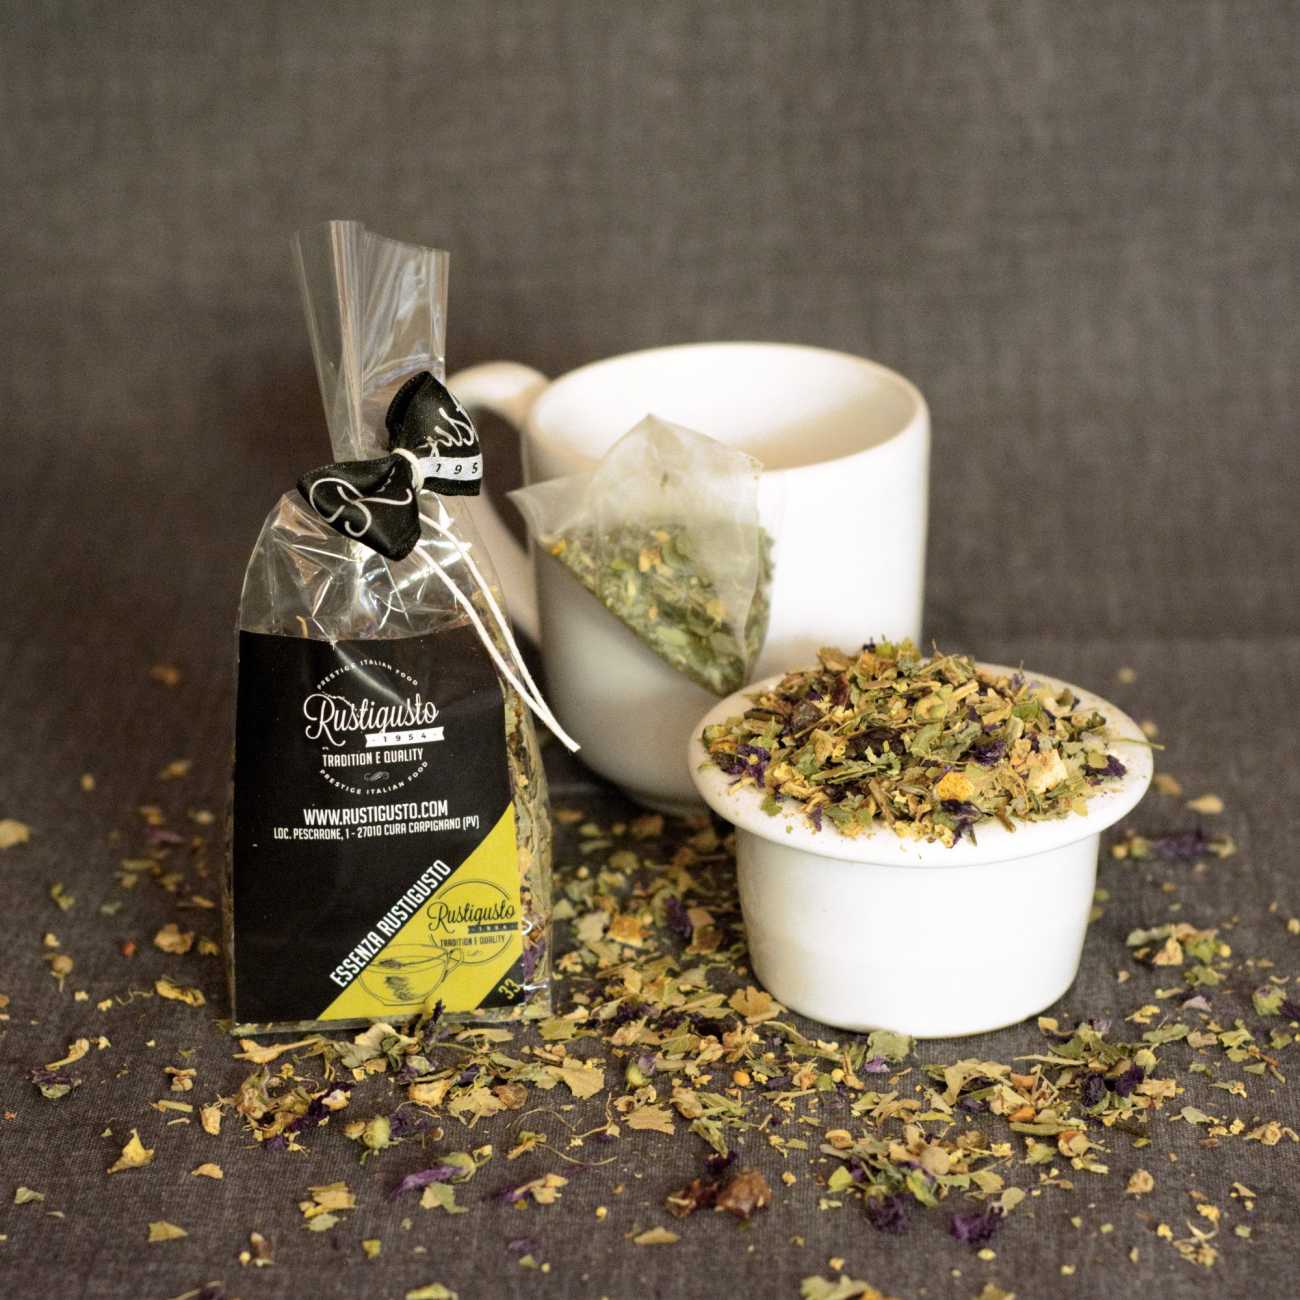 Rustigusto herb tea - Coffee and herbal teas